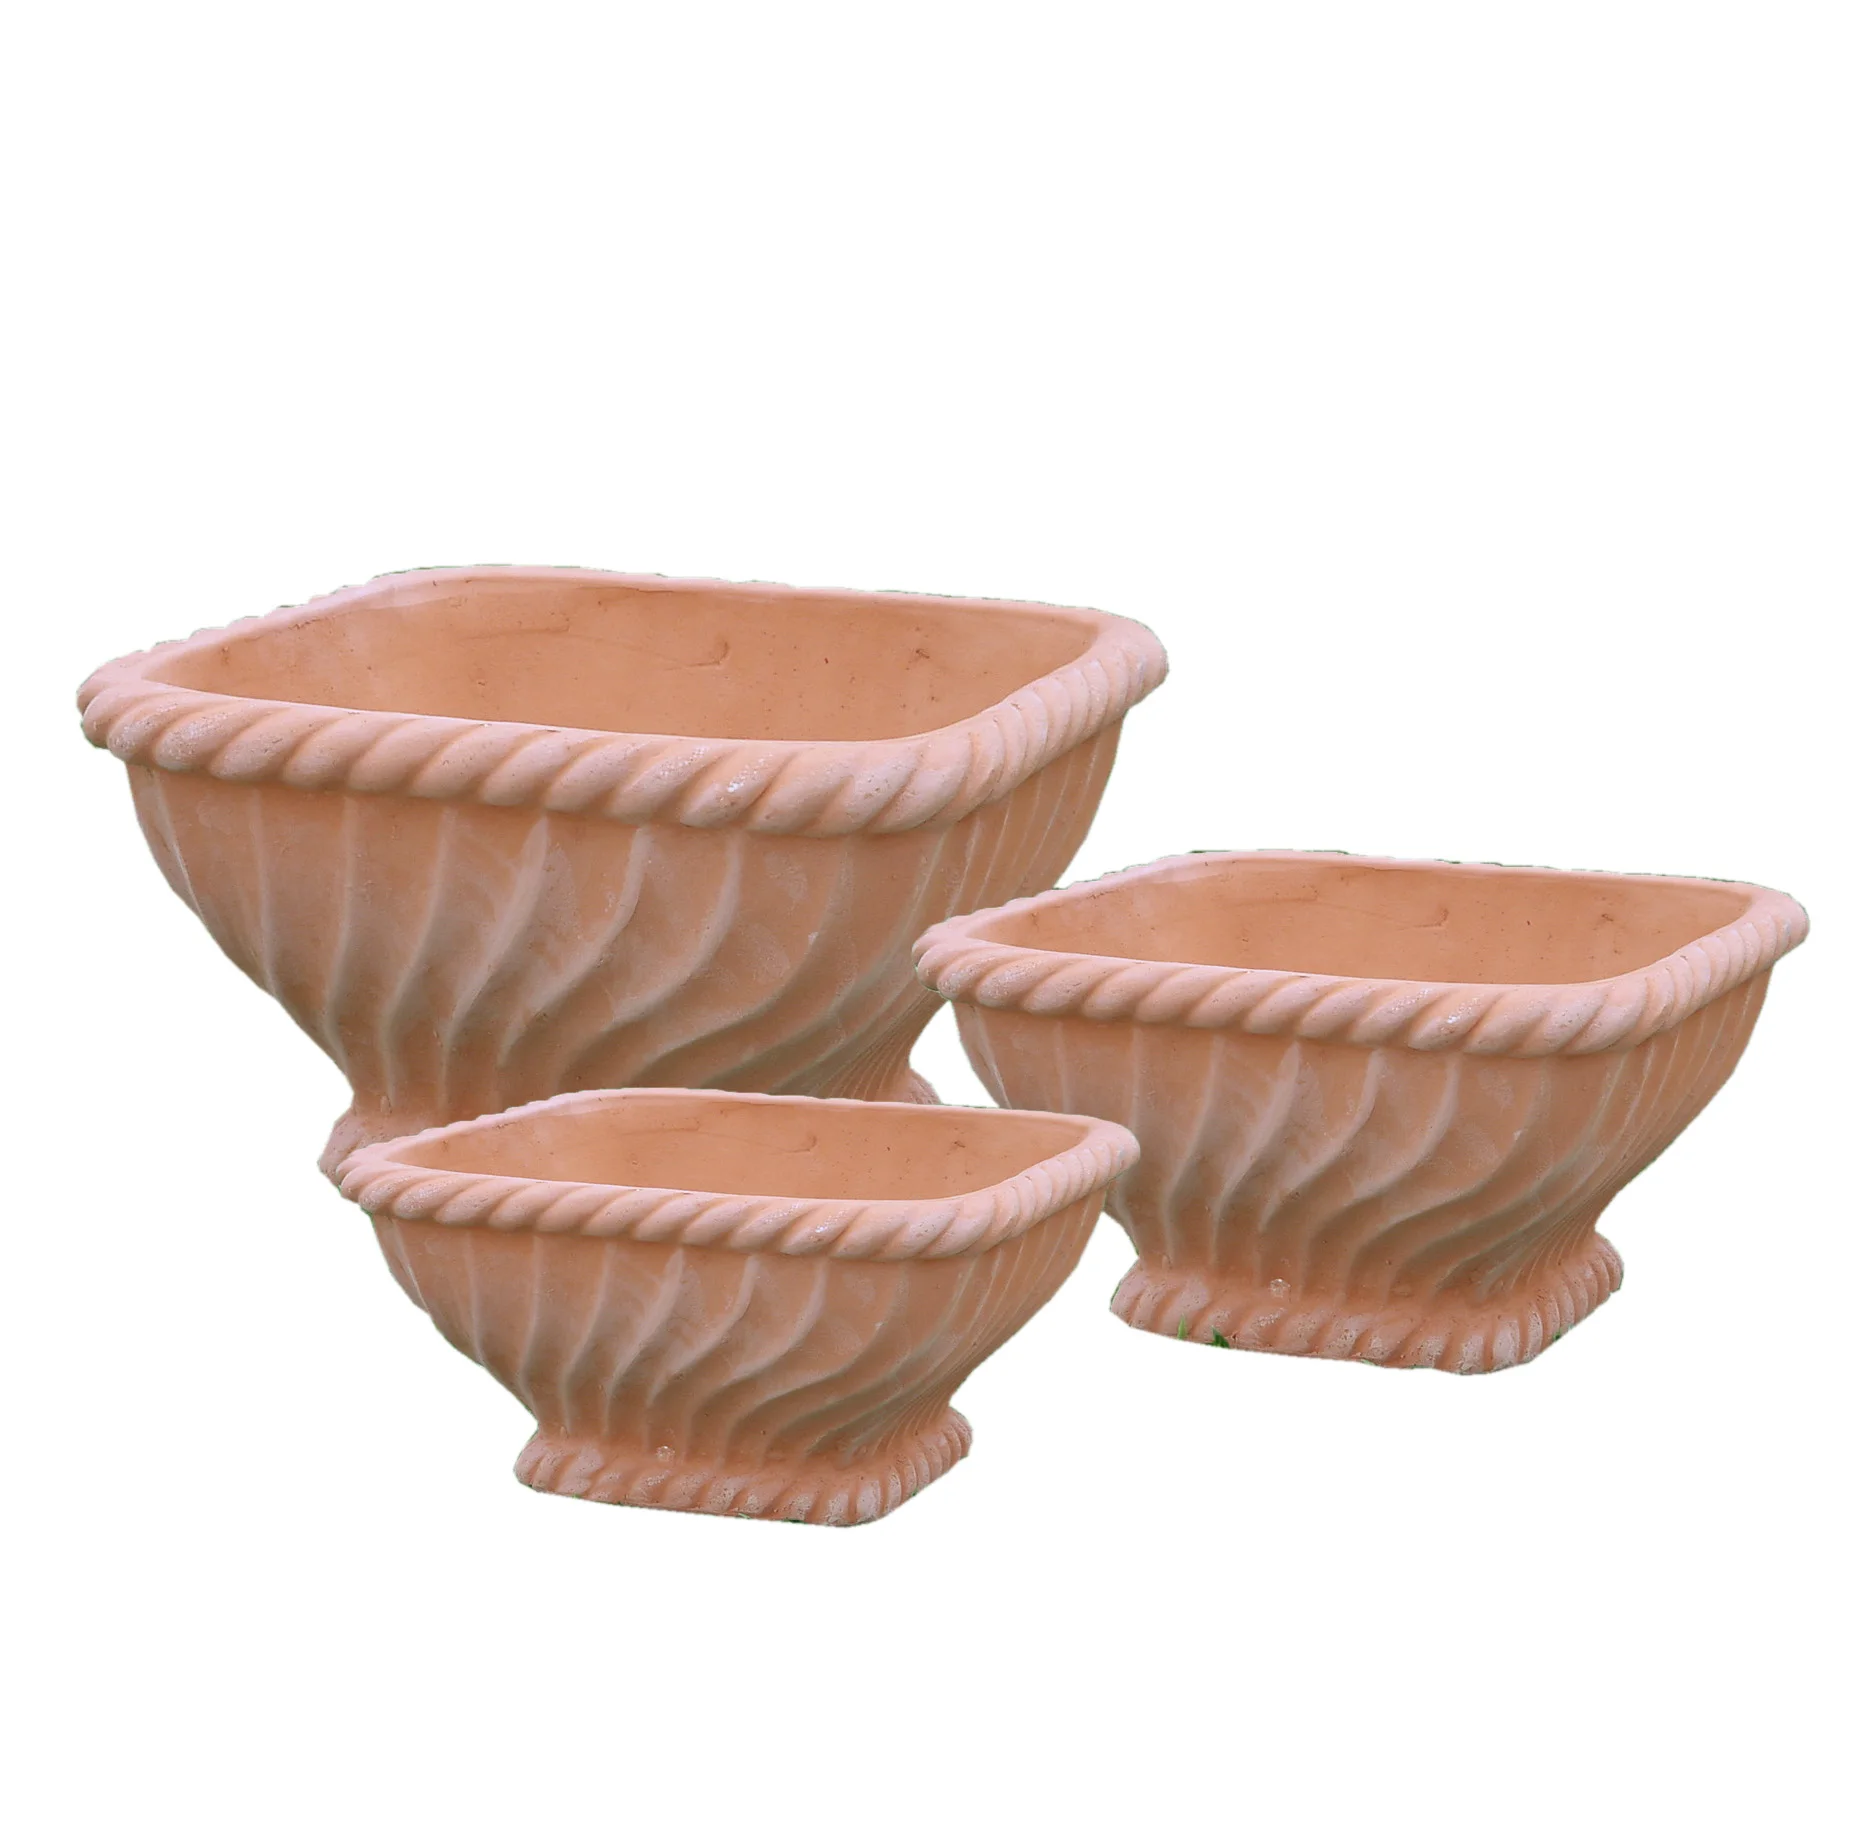 Ceramic Terracotta Pot Medium Size Handmade European Design Vase for Home Garden Nursery Shopping Mall Decor Floor Usage Room